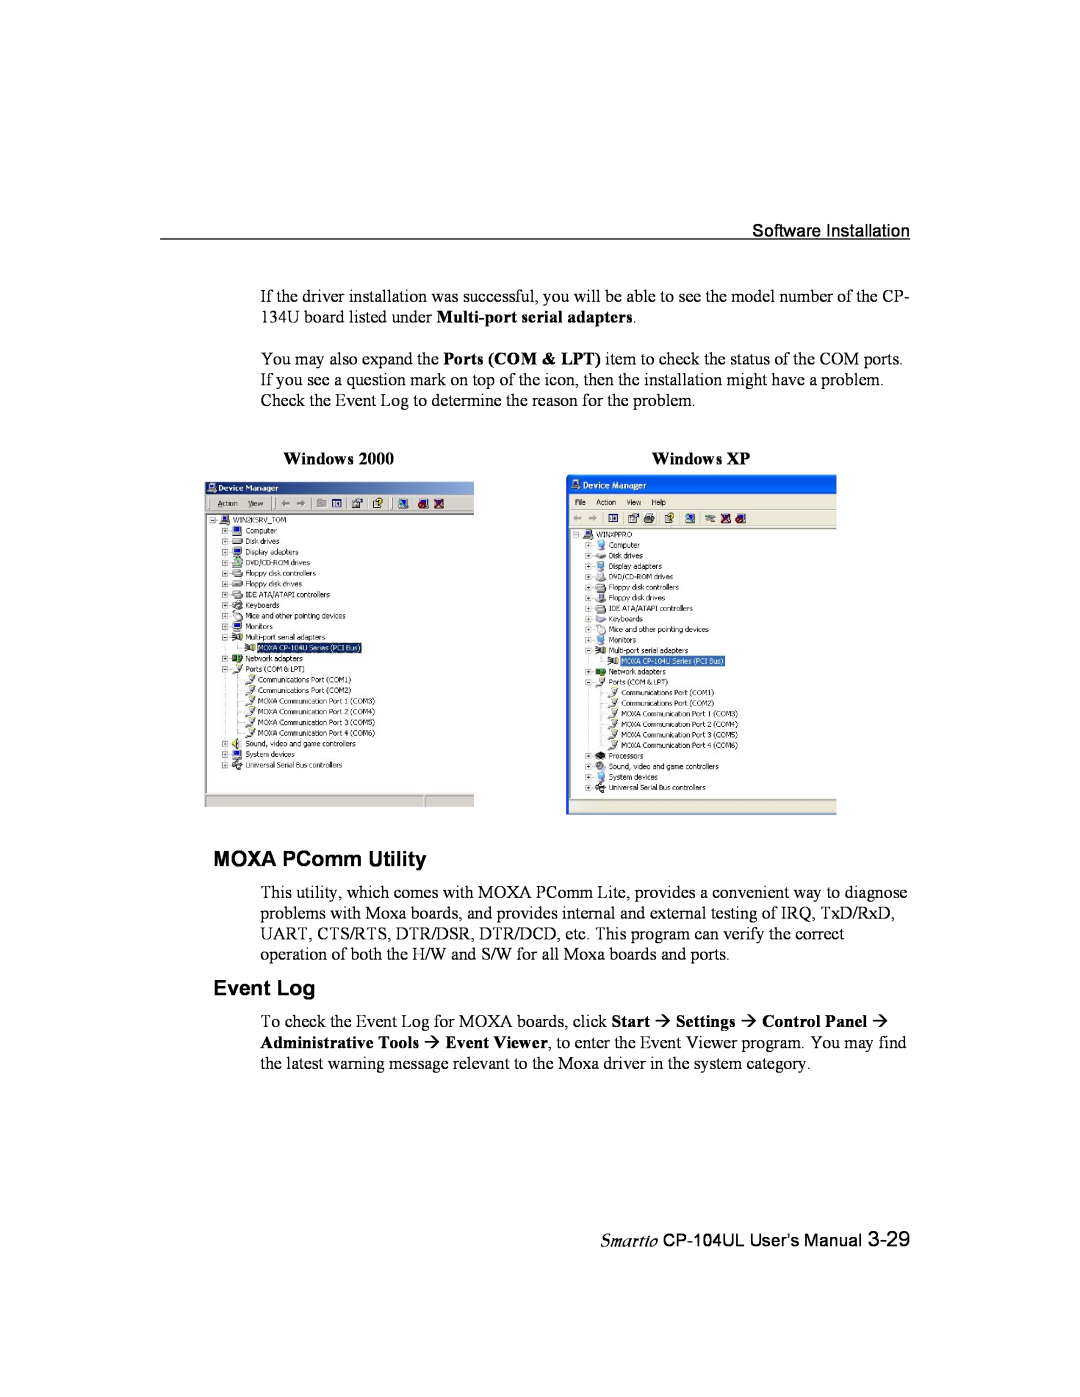 Moxa Technologies CP-104UL user manual MOXA PComm Utility, Event Log, Windows XP 